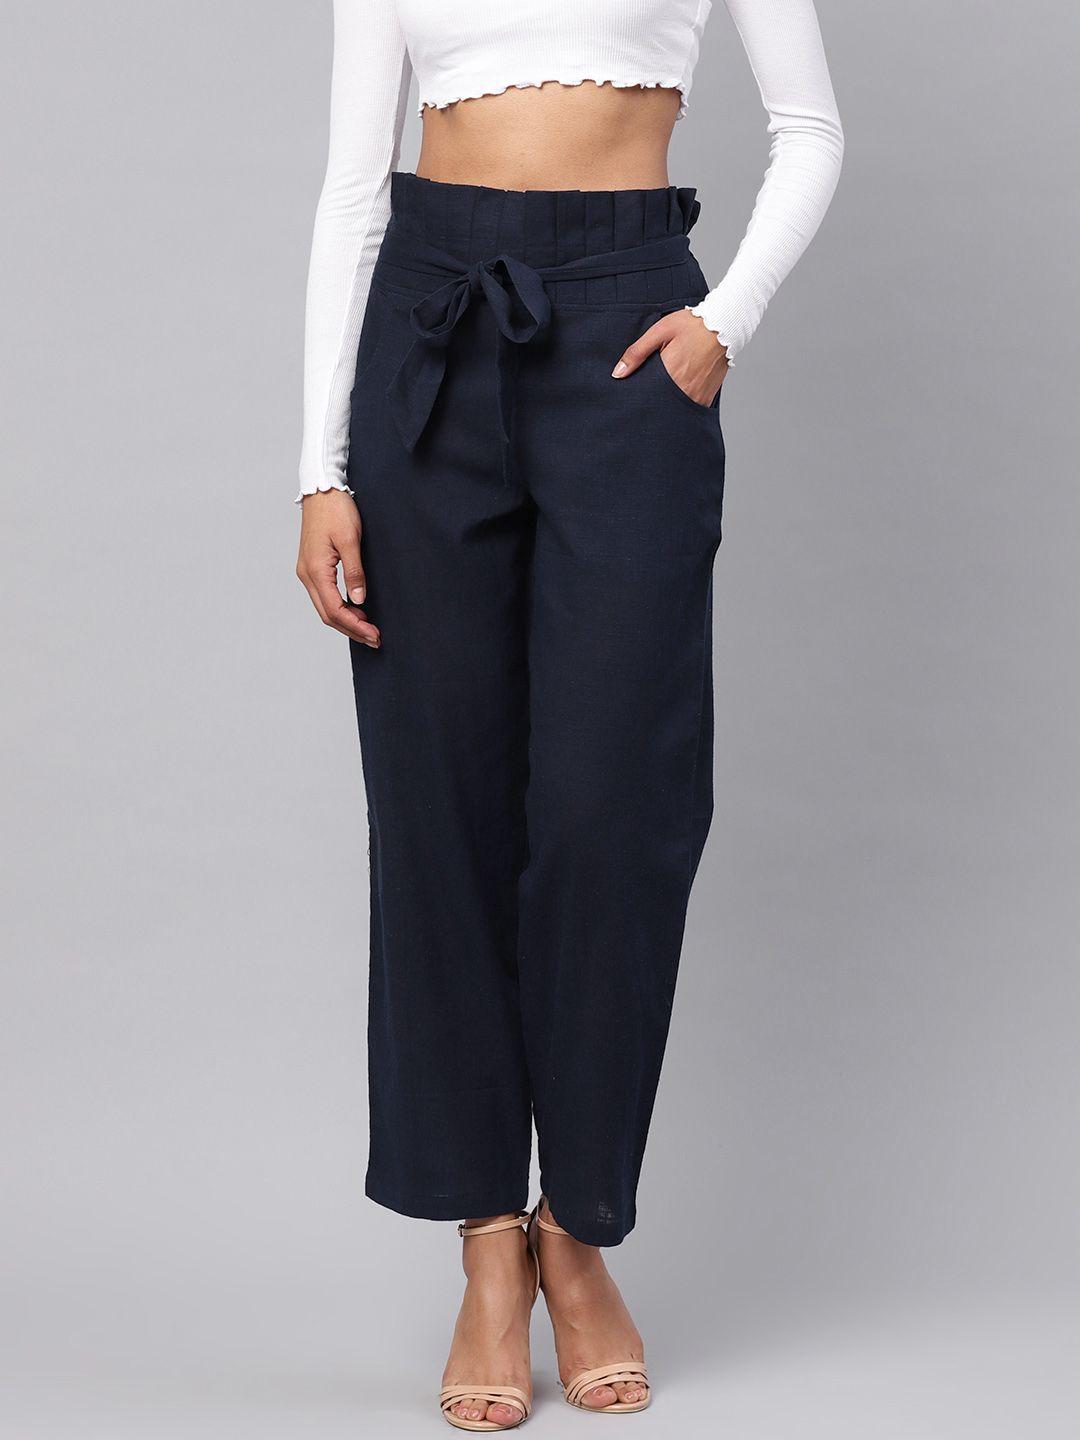 idalia women navy blue regular fit solid trousers